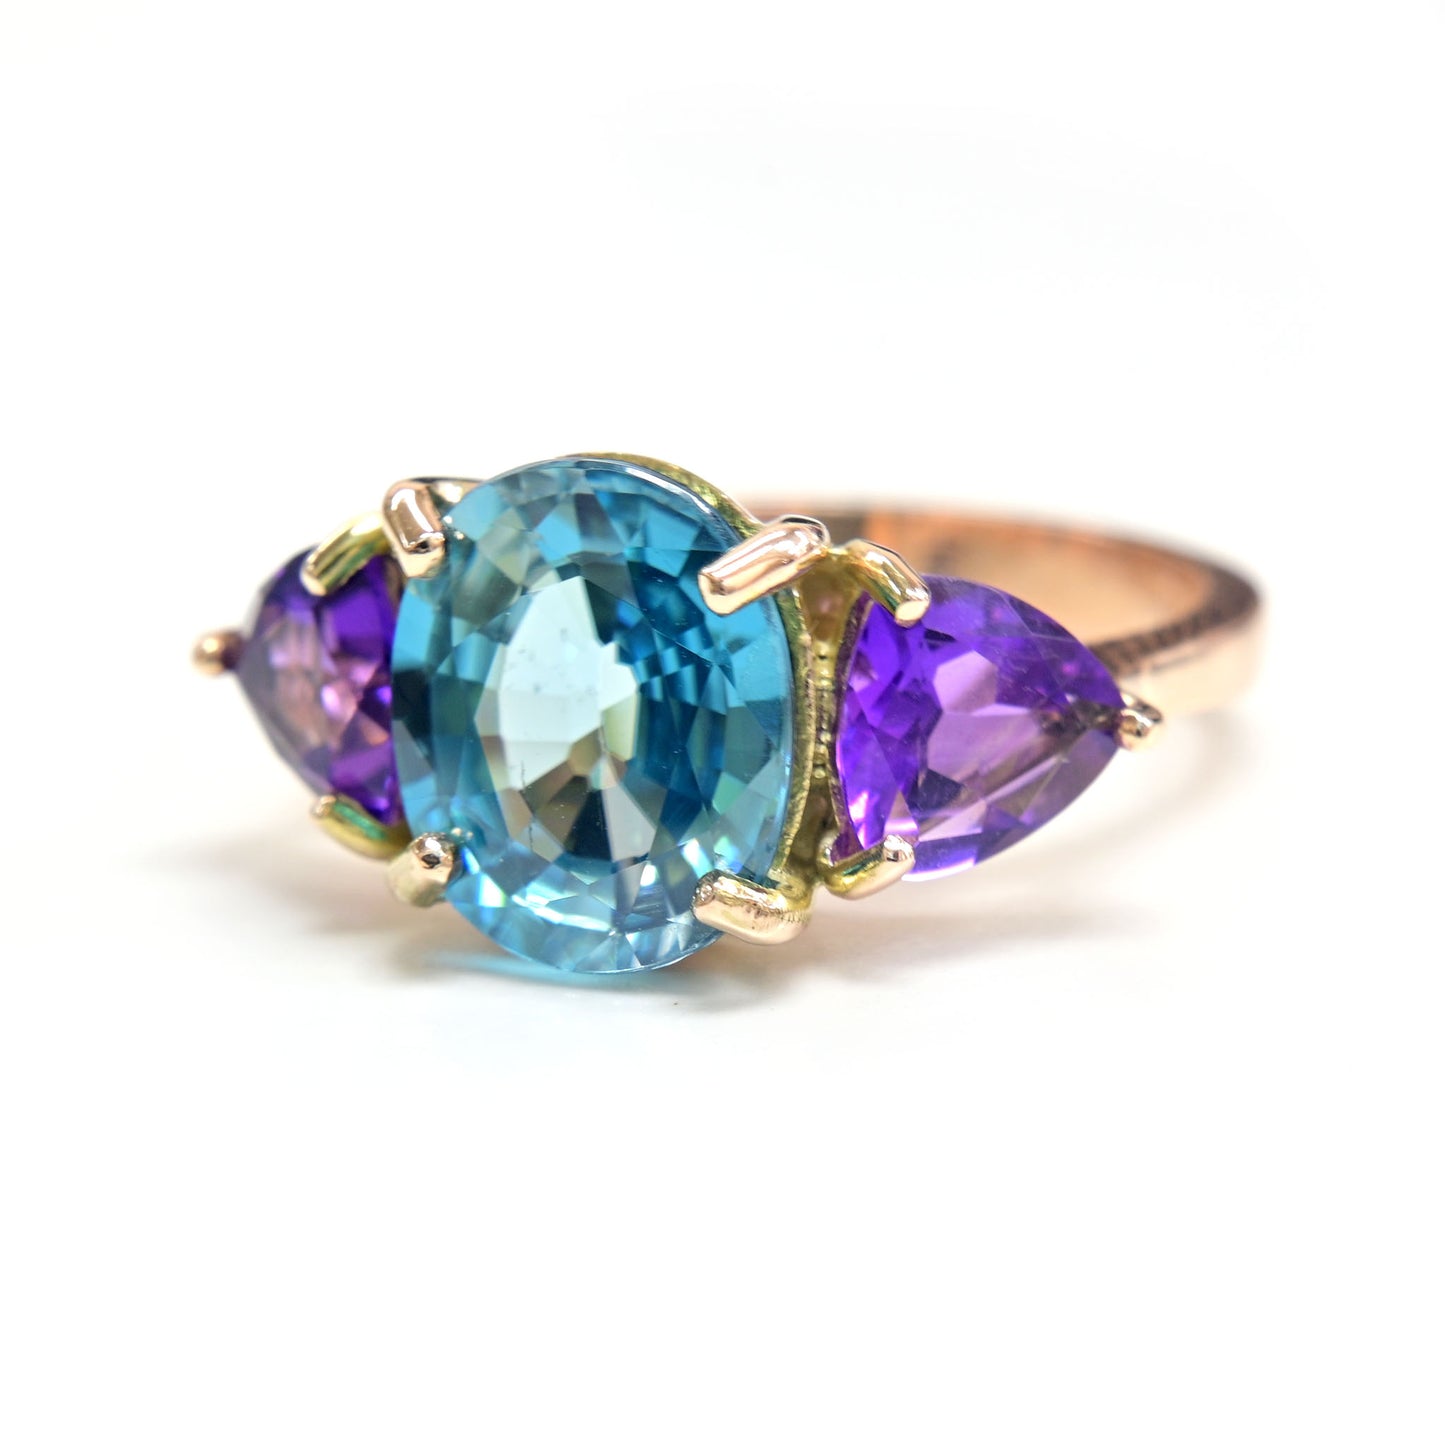 Blue zircon ring in 14k rose gold